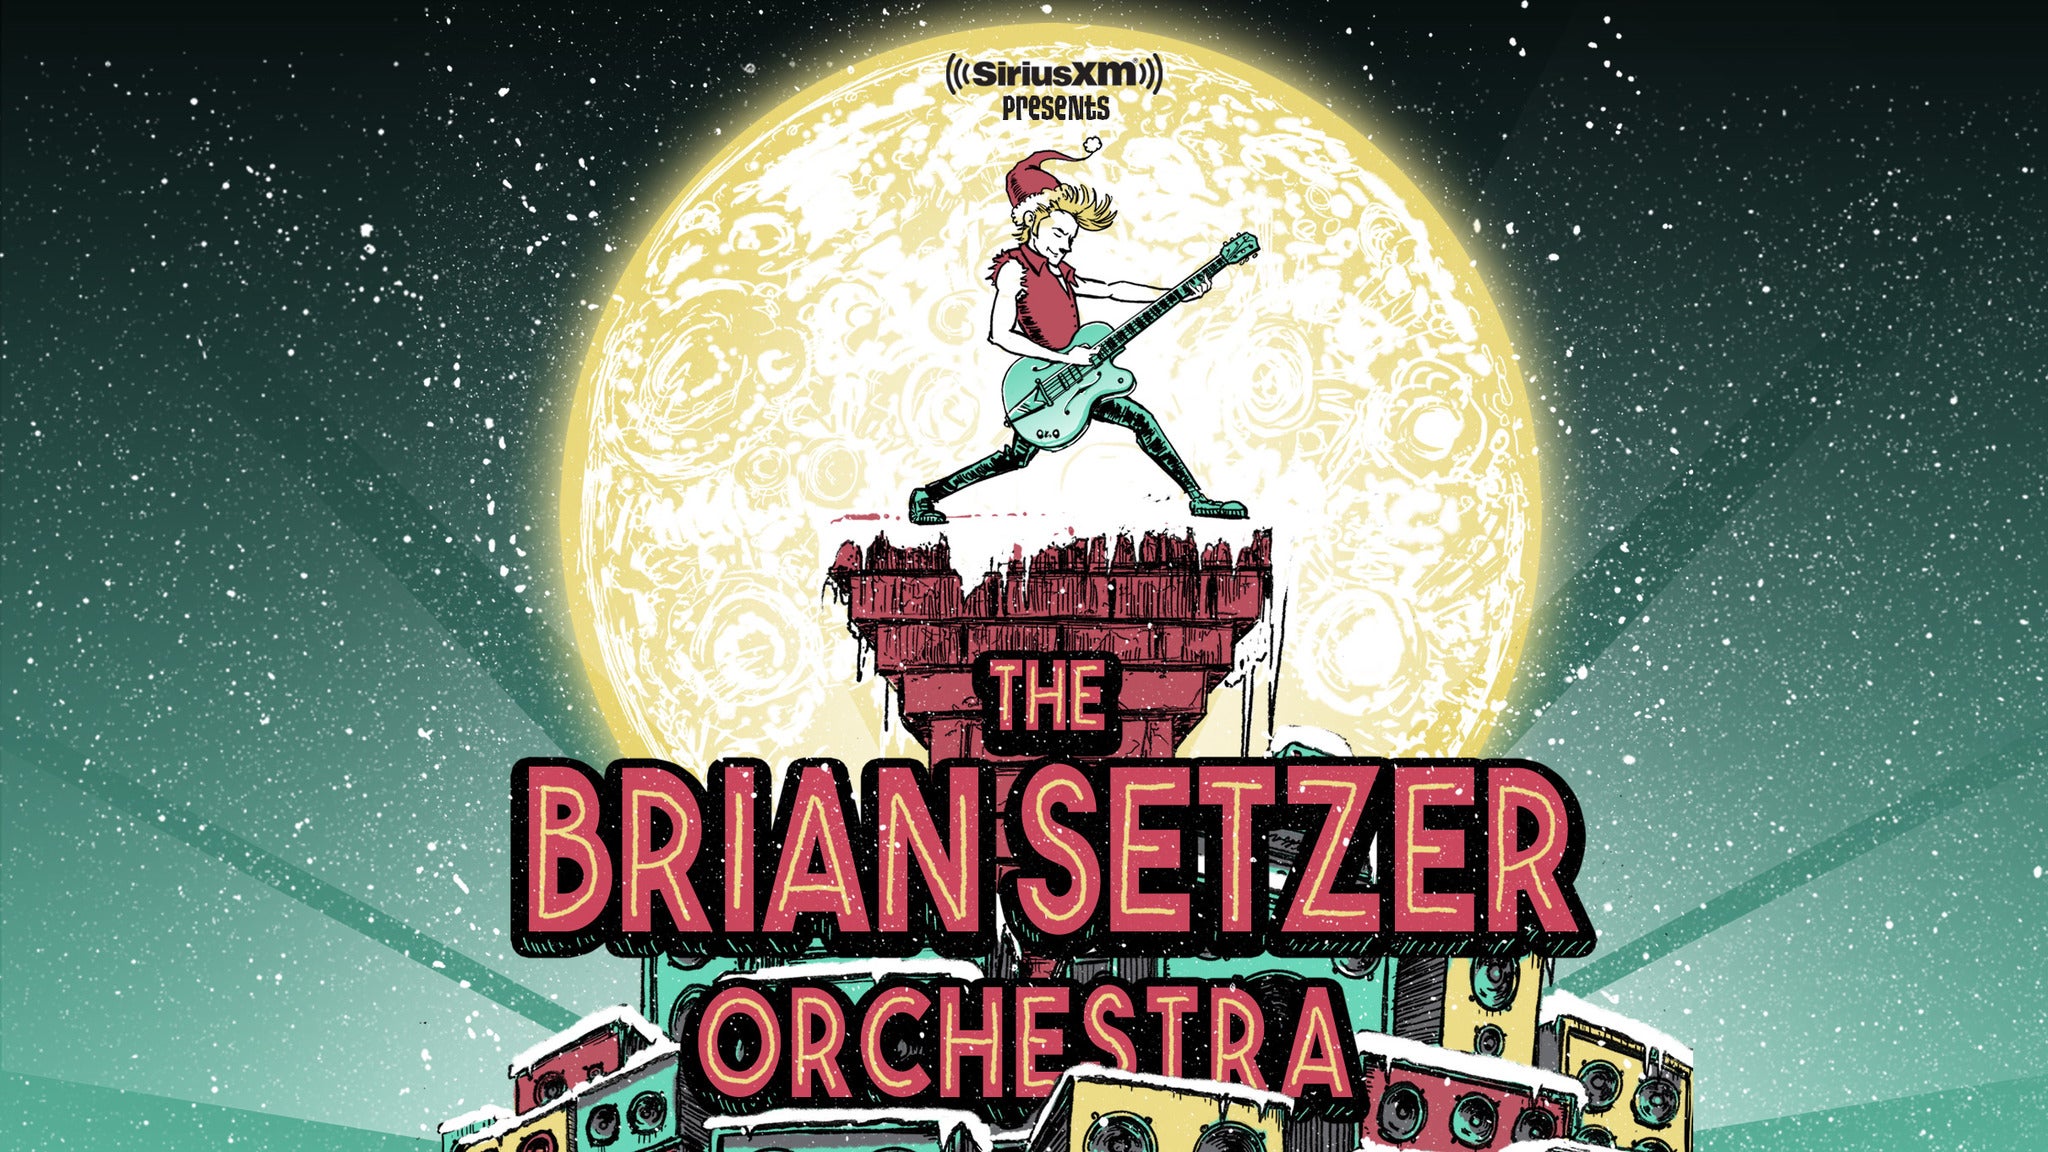 The Brian Setzer Orchestra's 16th Annual Christmas Rocks! Tour in Denver promo photo for Venue & Radio presale offer code